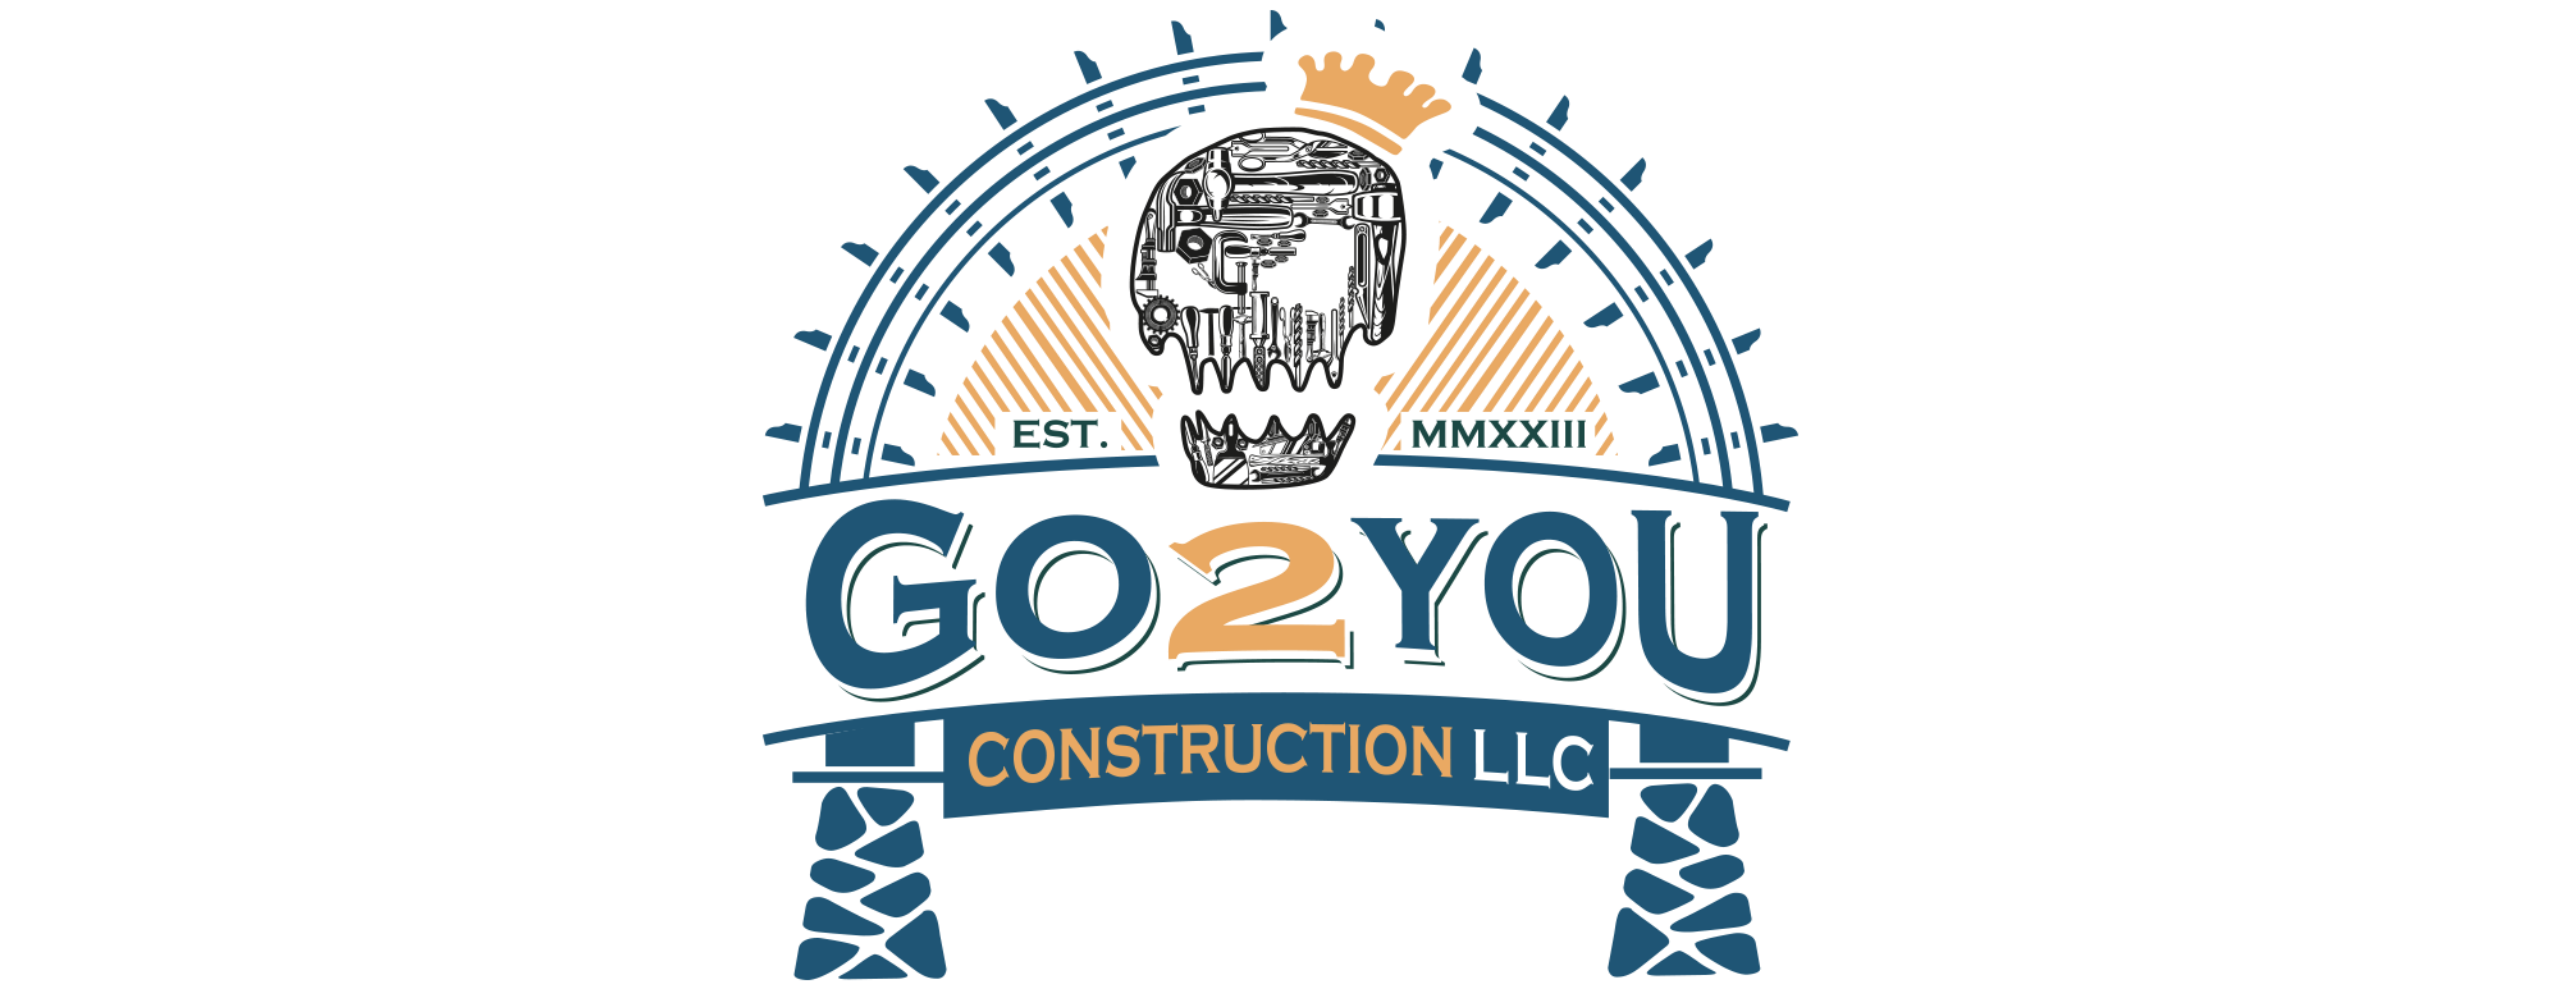 Go2you Construction LLC Logo